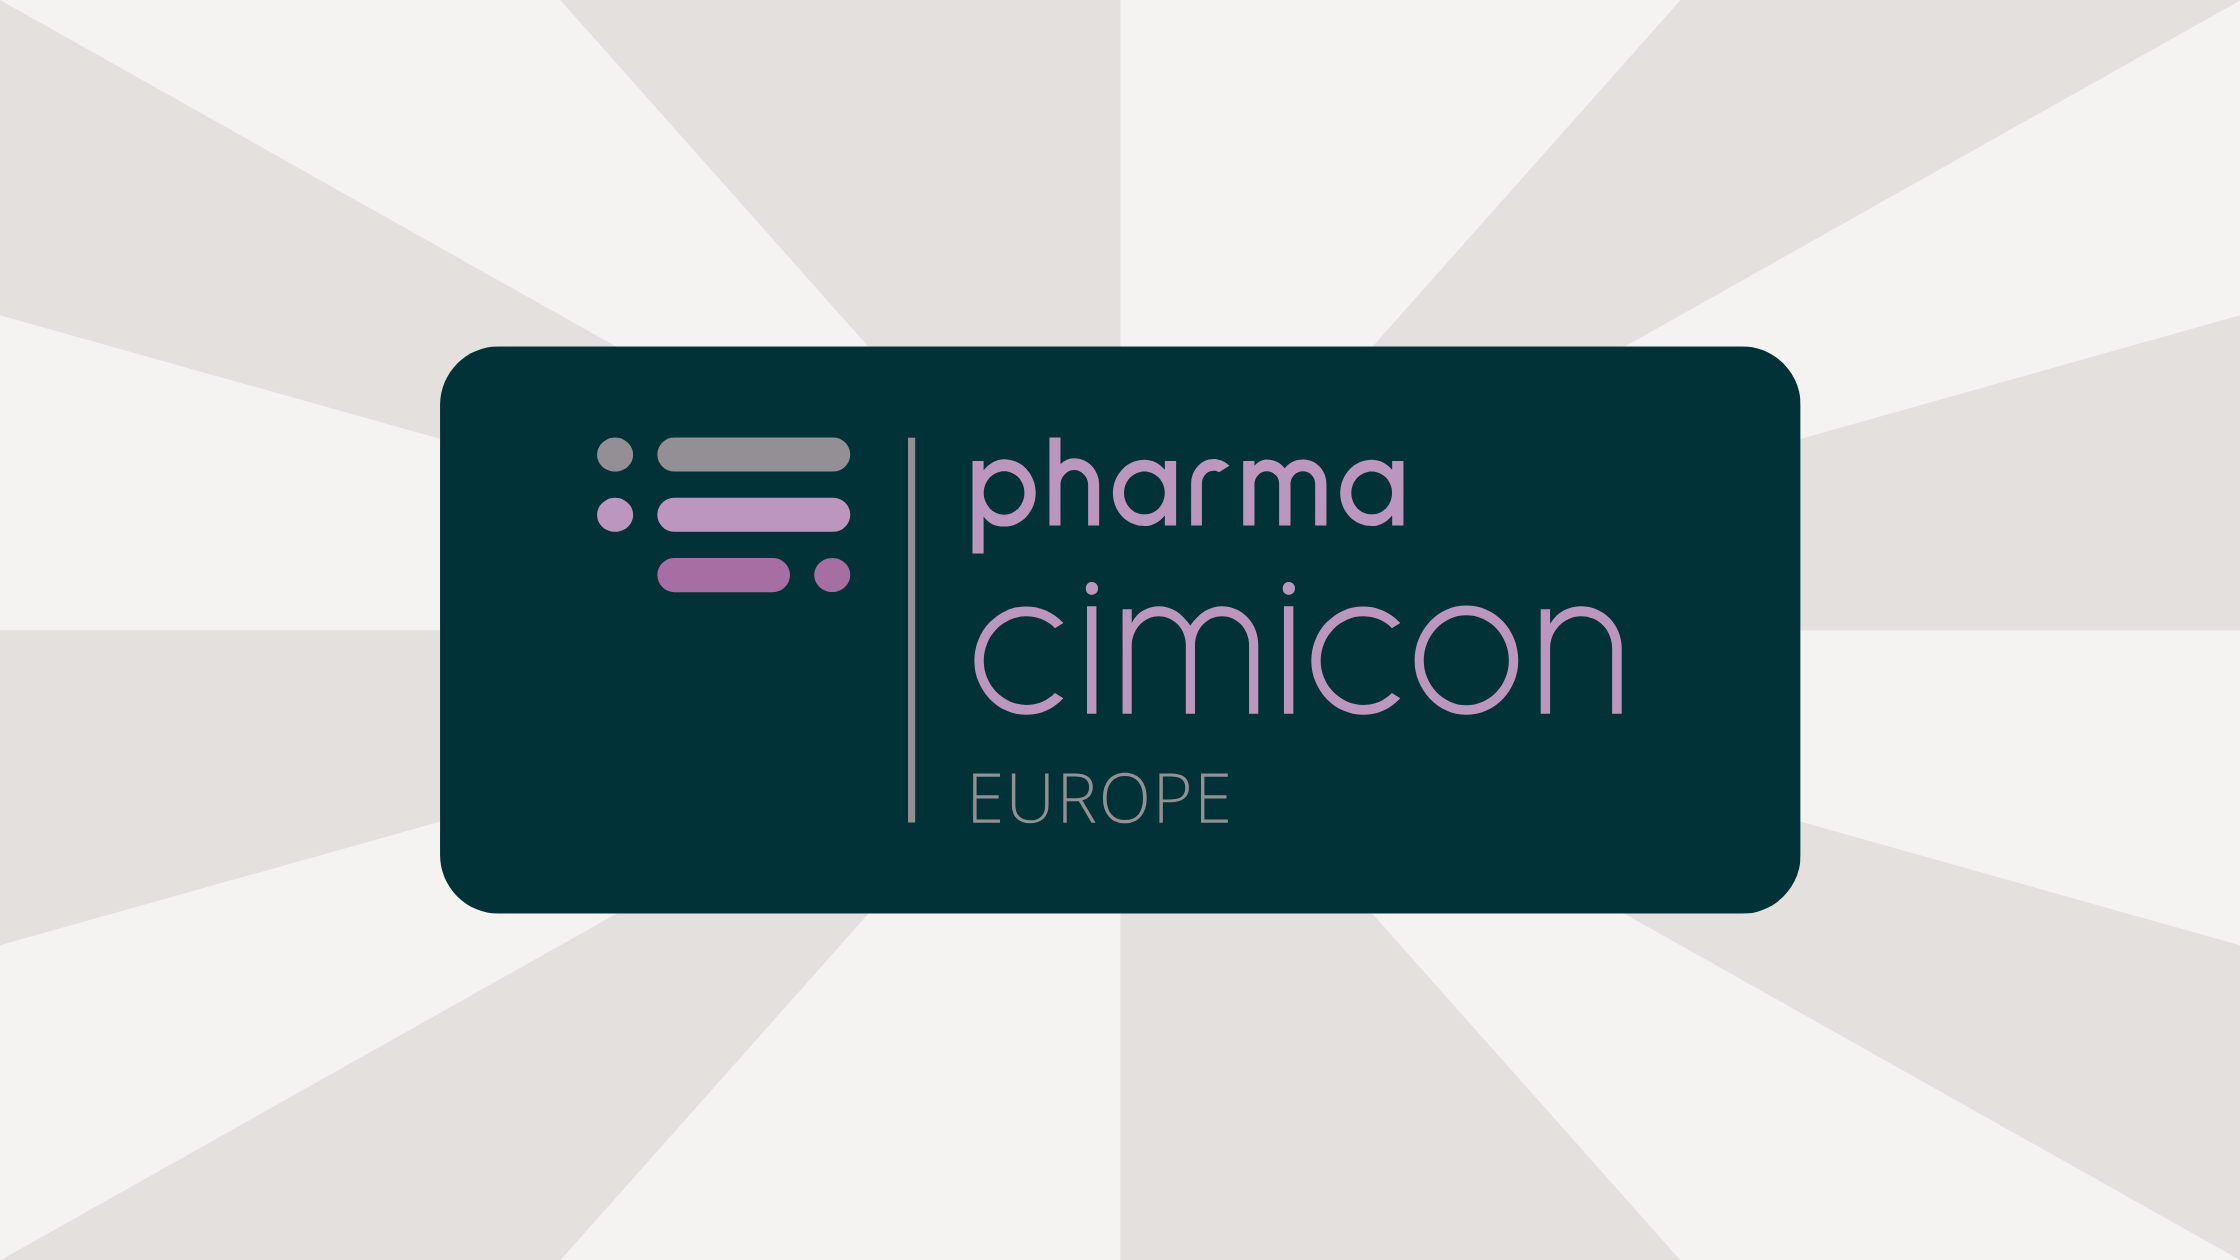 Pharma CiMiCON Europe